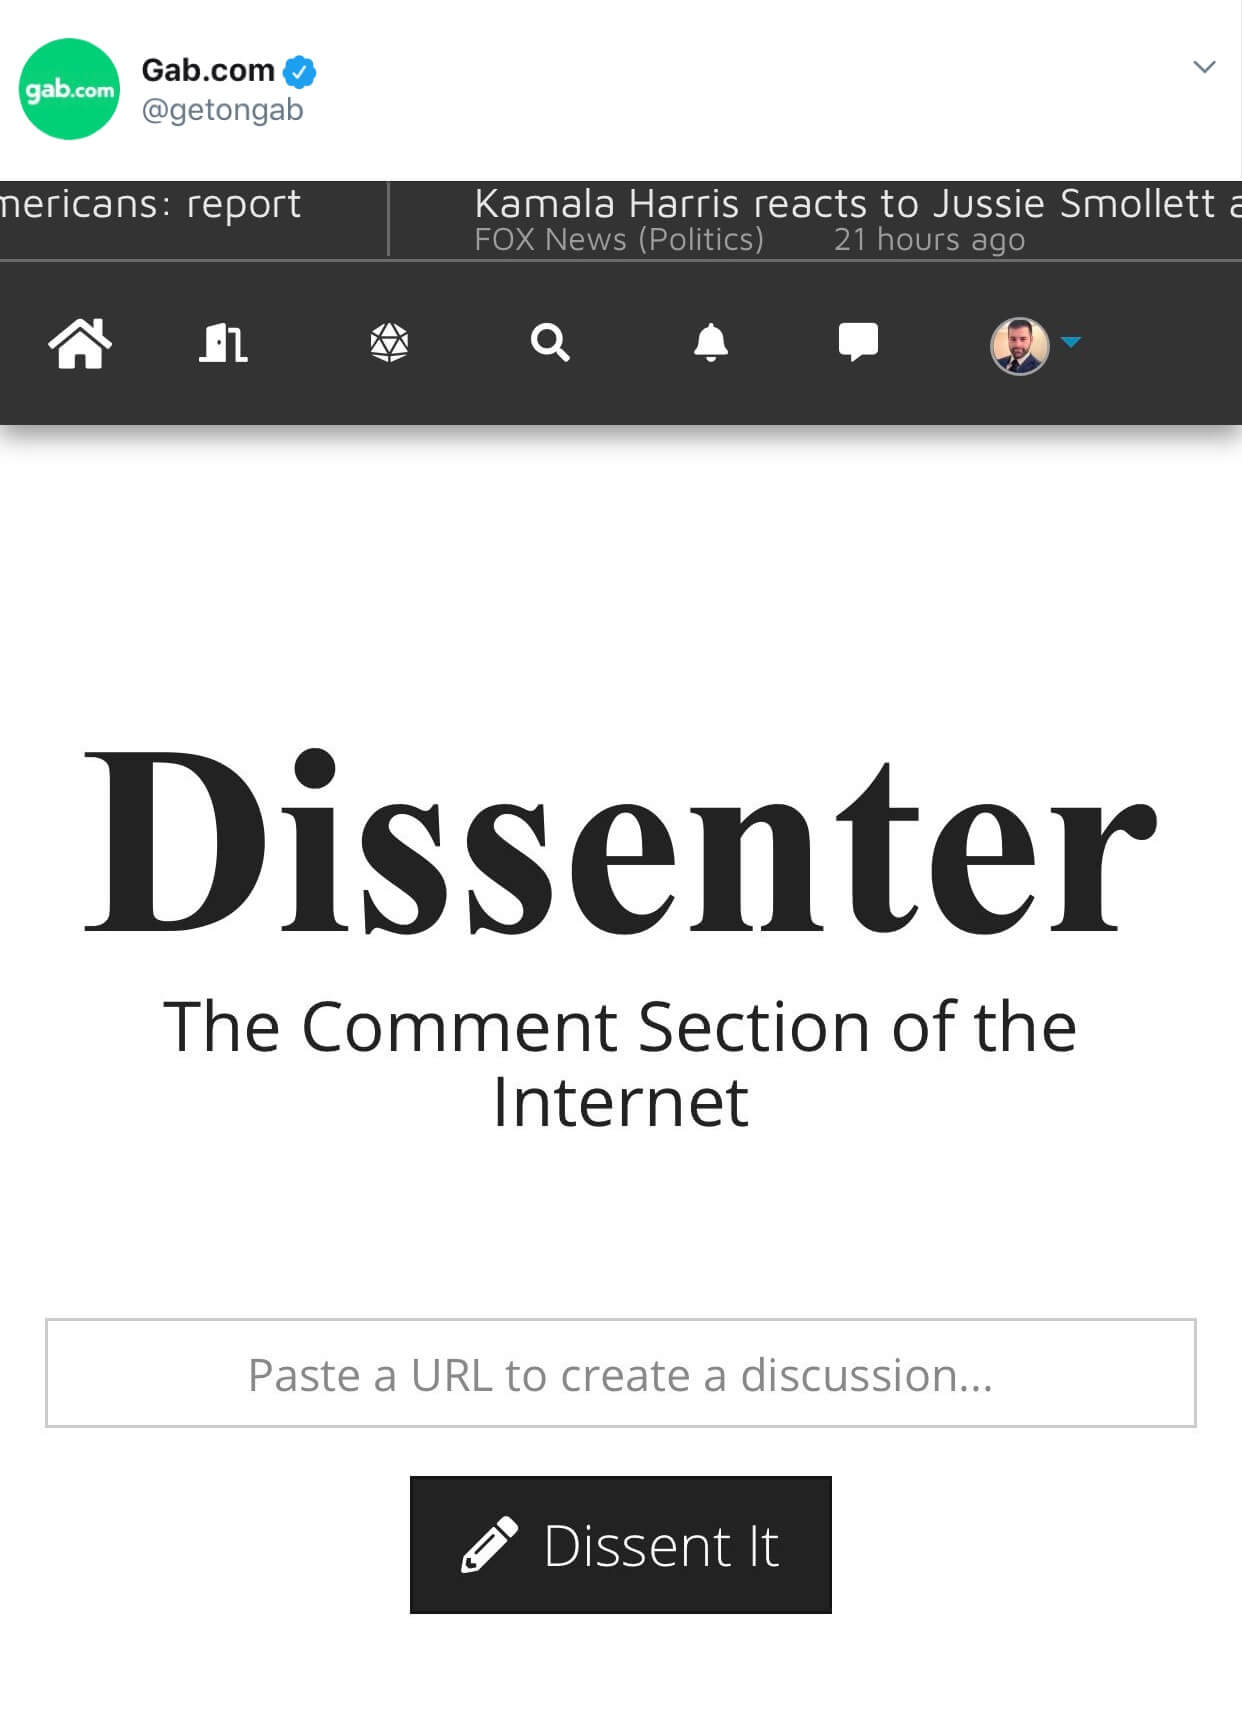 The Dissenter web app.